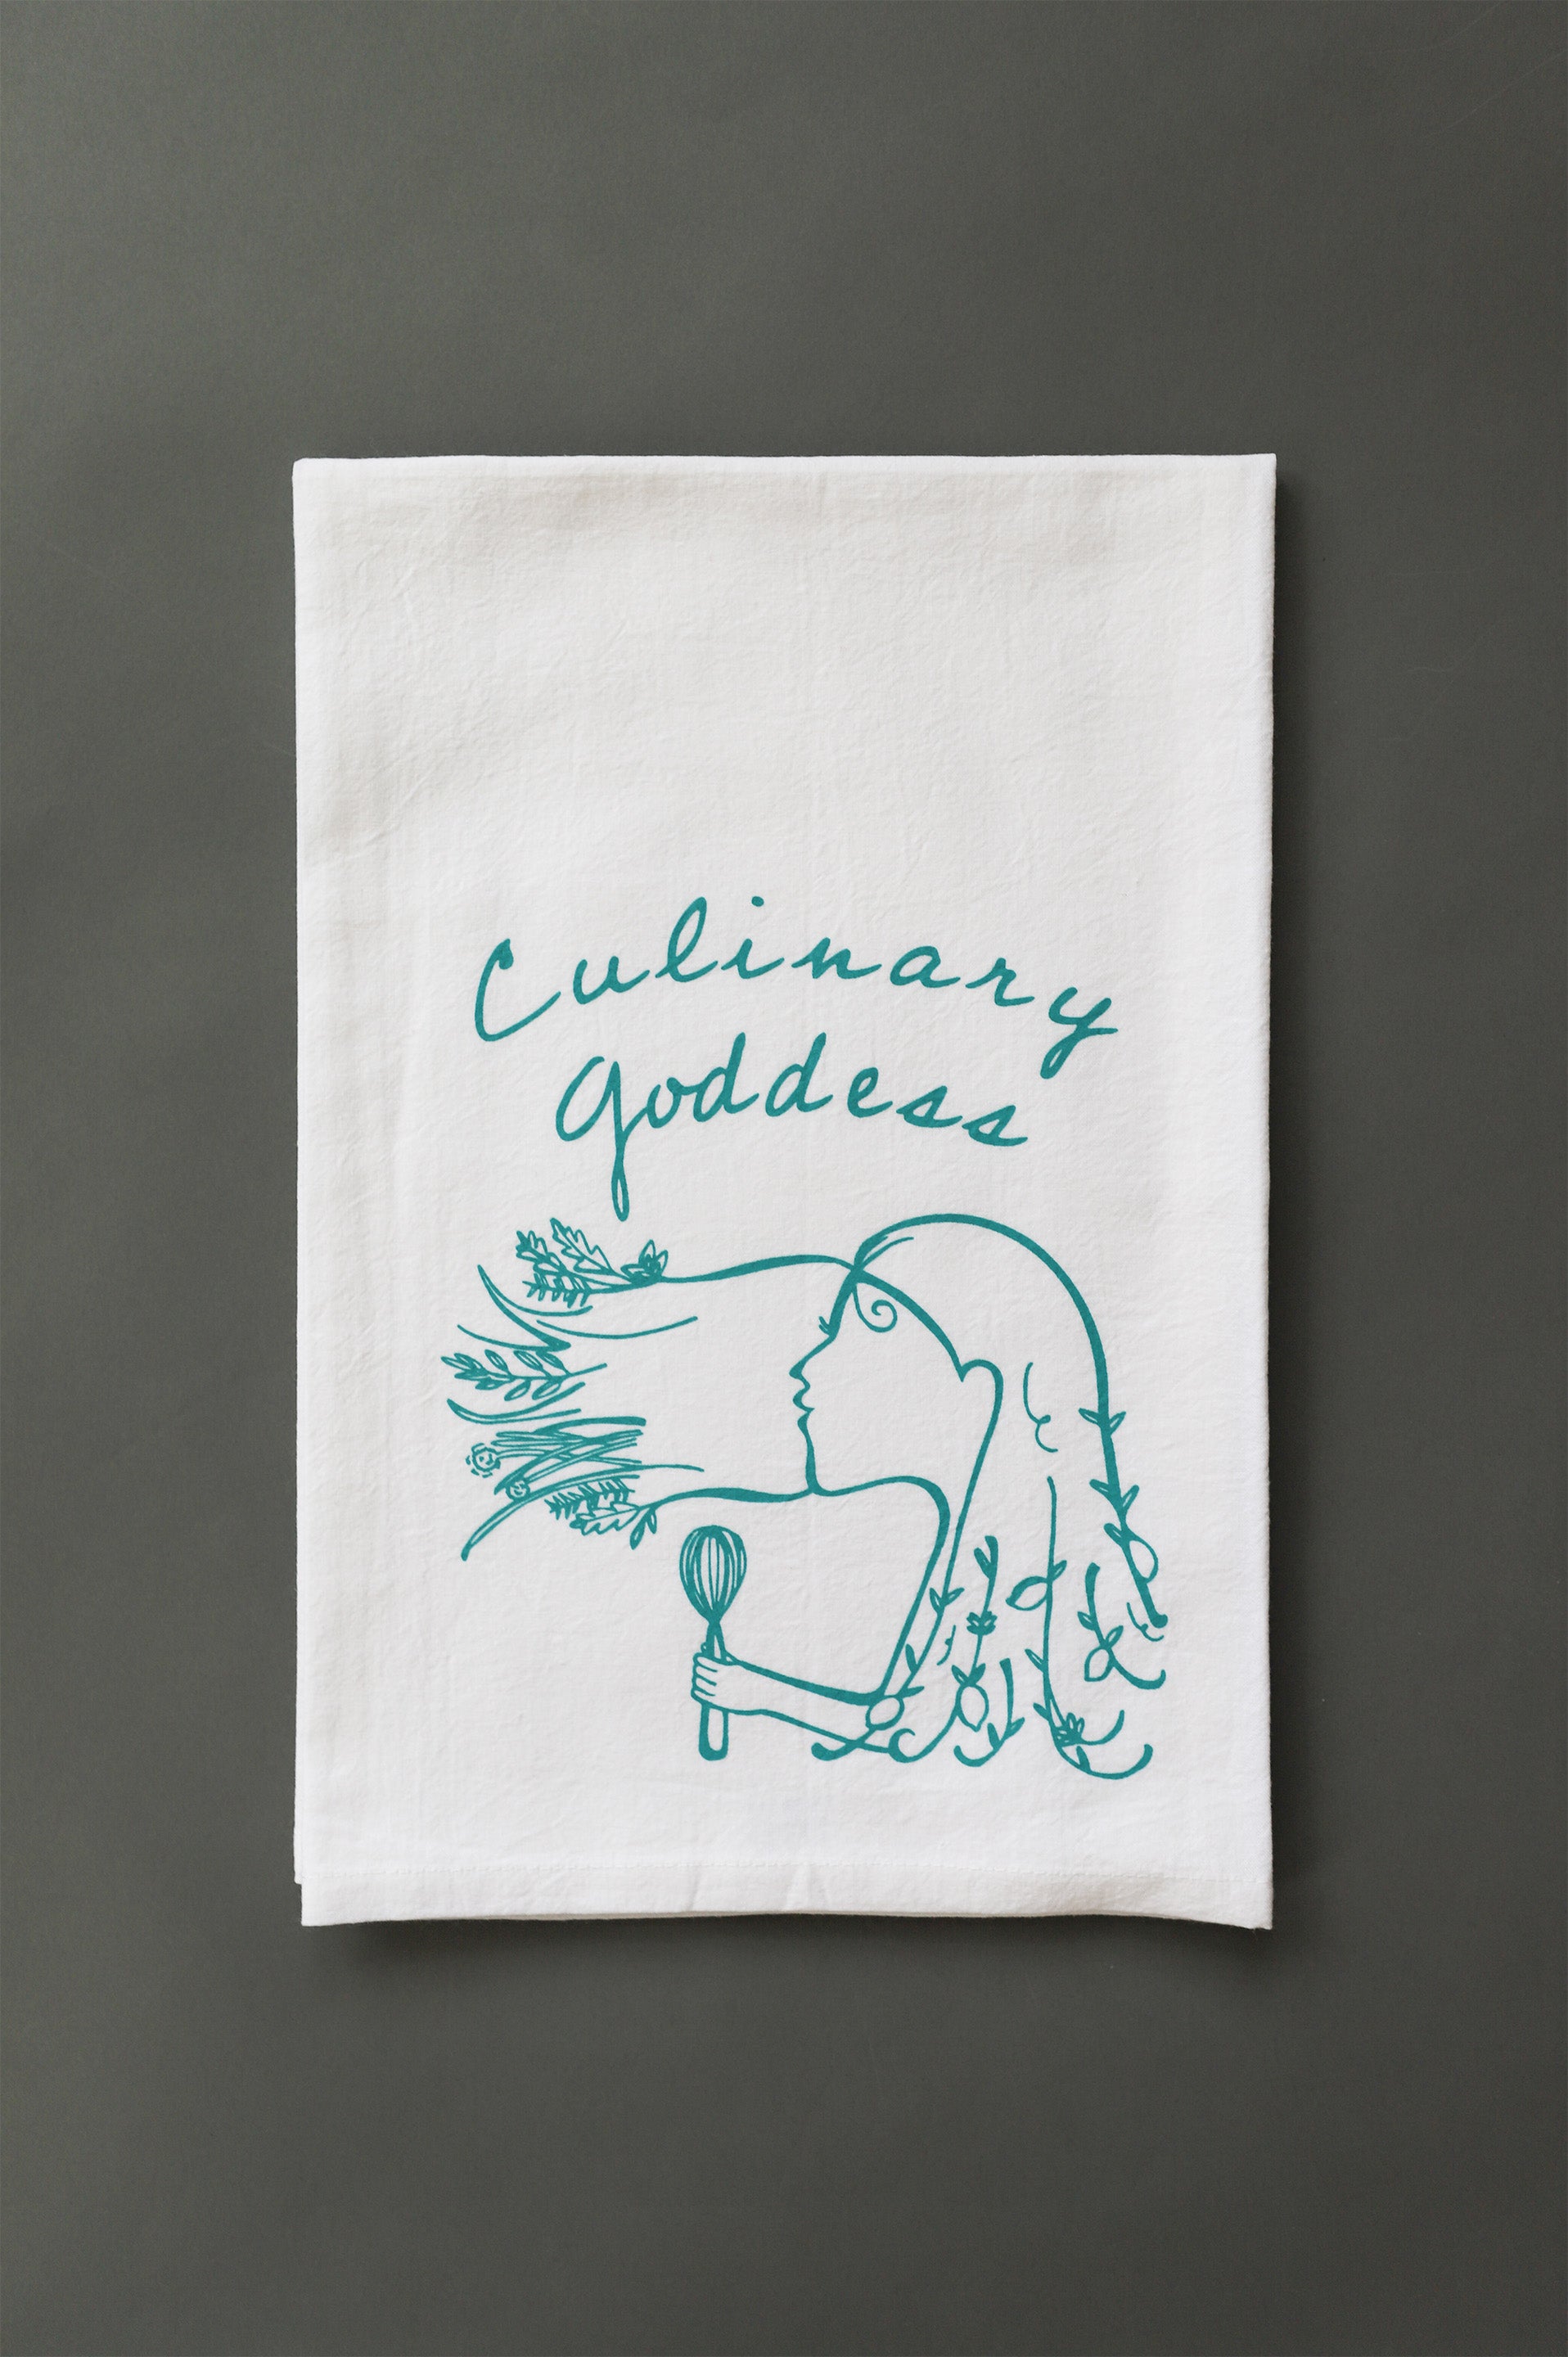 Culinary Goddess Tea Towel, feminist baker, kitchen towel